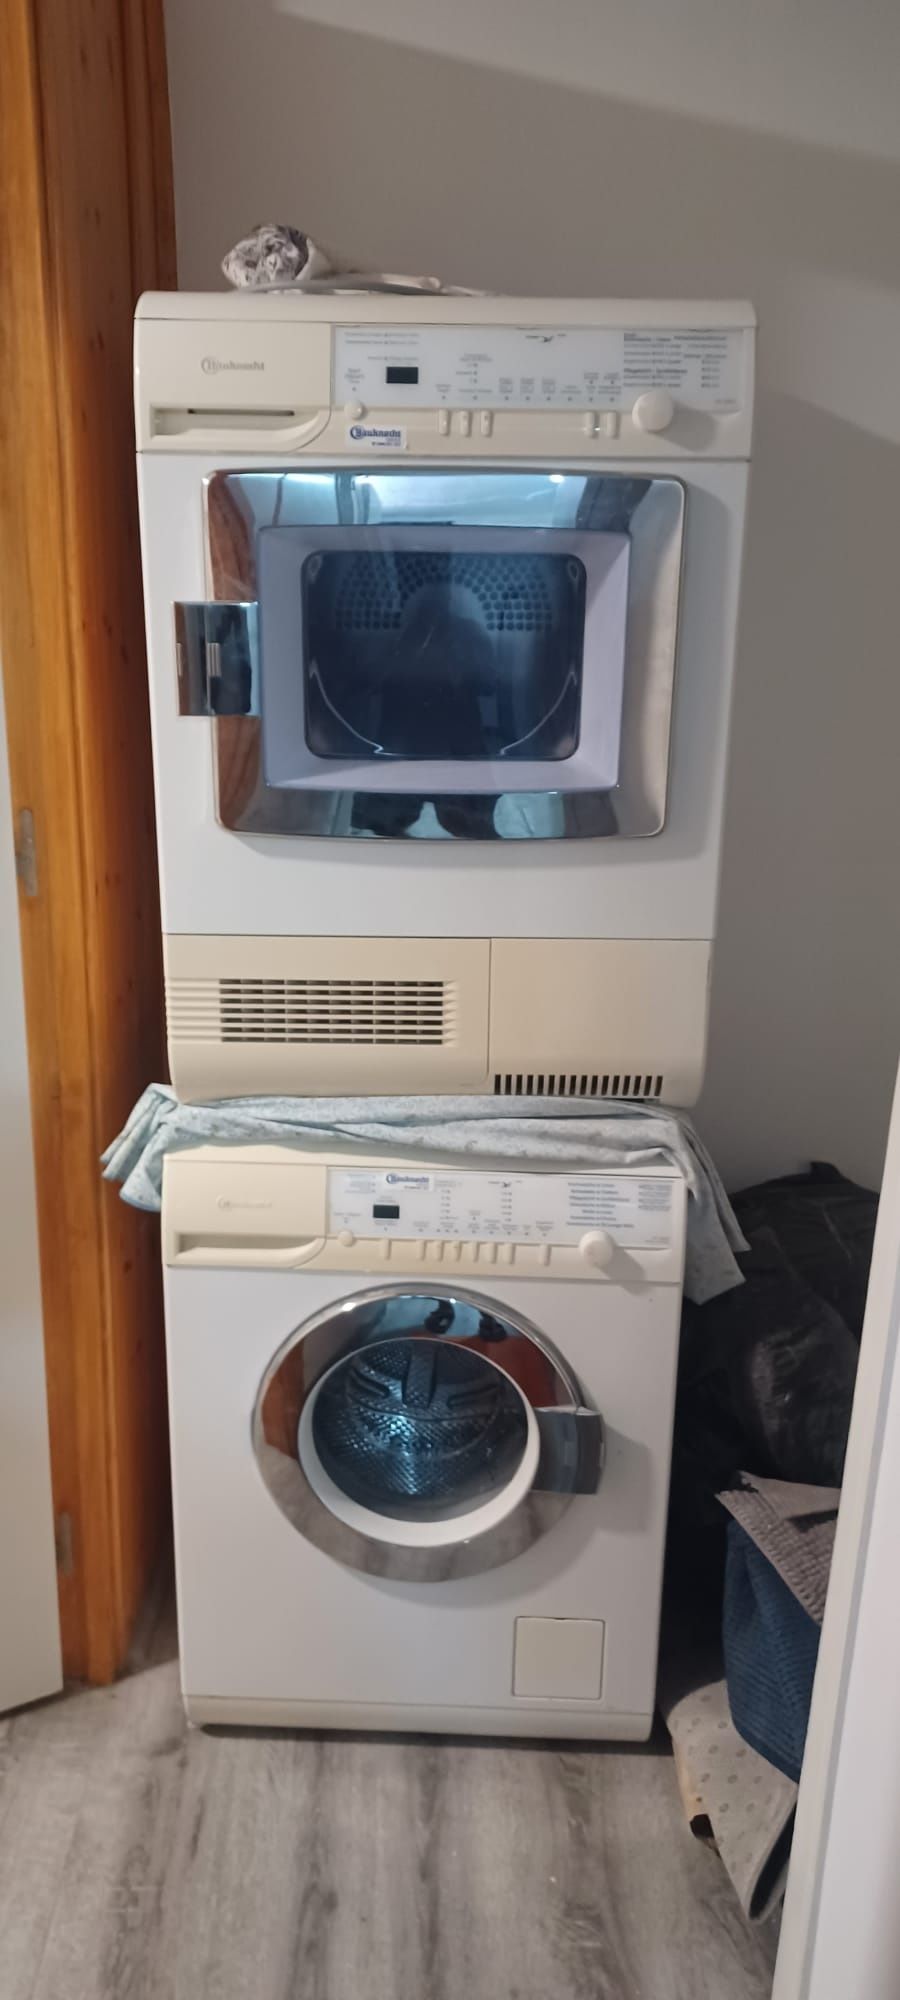 Baucheneecht, 2 máquinas roupa e outra secar roupa